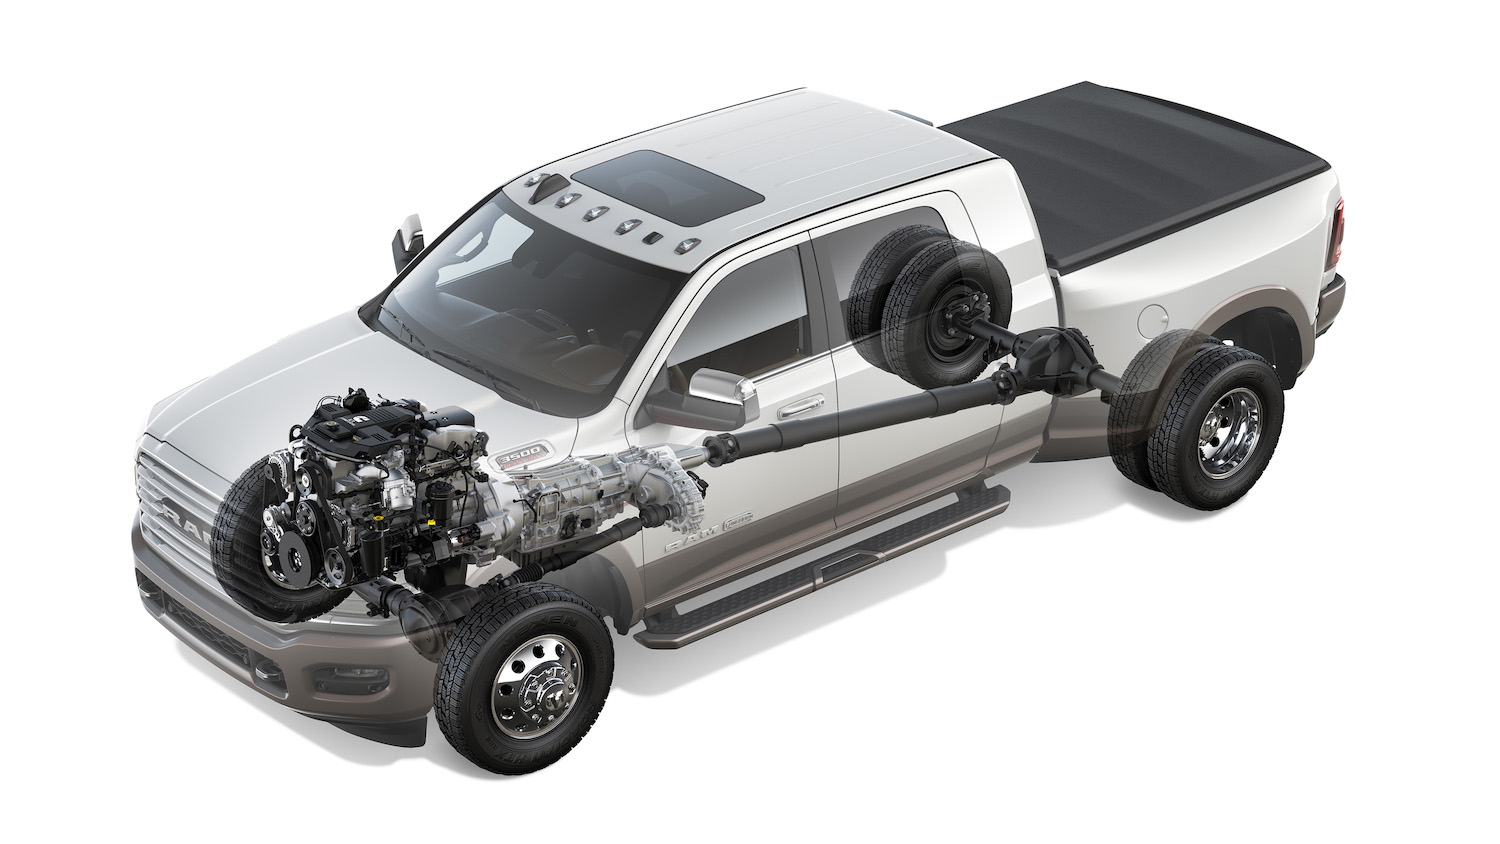 Cutaway render of a Dodge Ram 3500 pickup truck showing its Cummins turbodiesel powertrain.